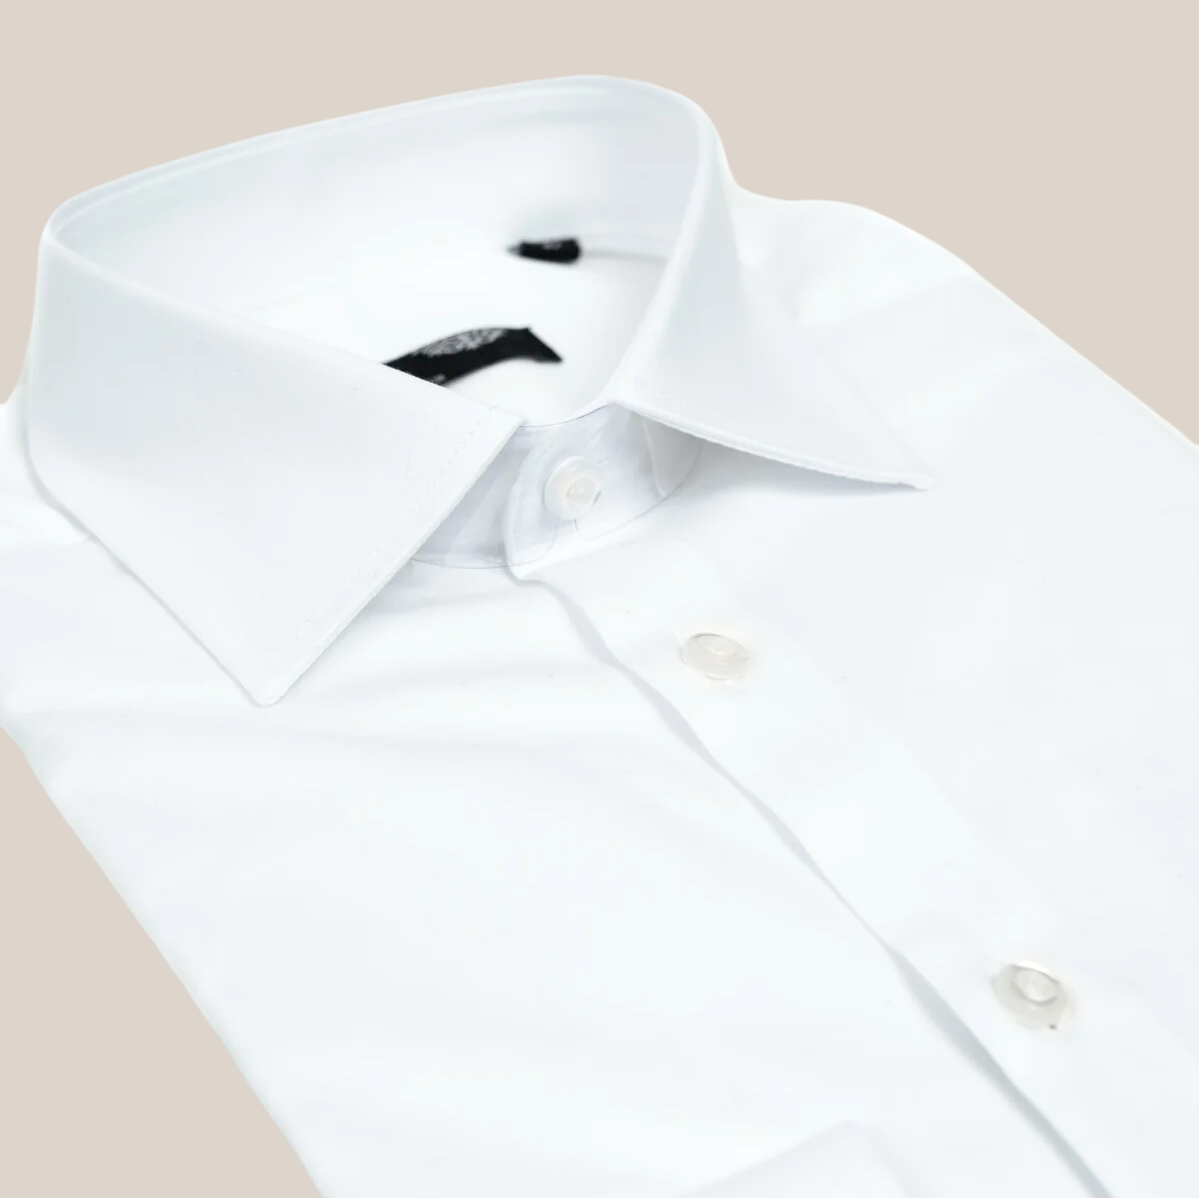 Gotstyle Fashion - Horst Collar Shirts Slim Fit Cotton Stretch Dress Shirt - White